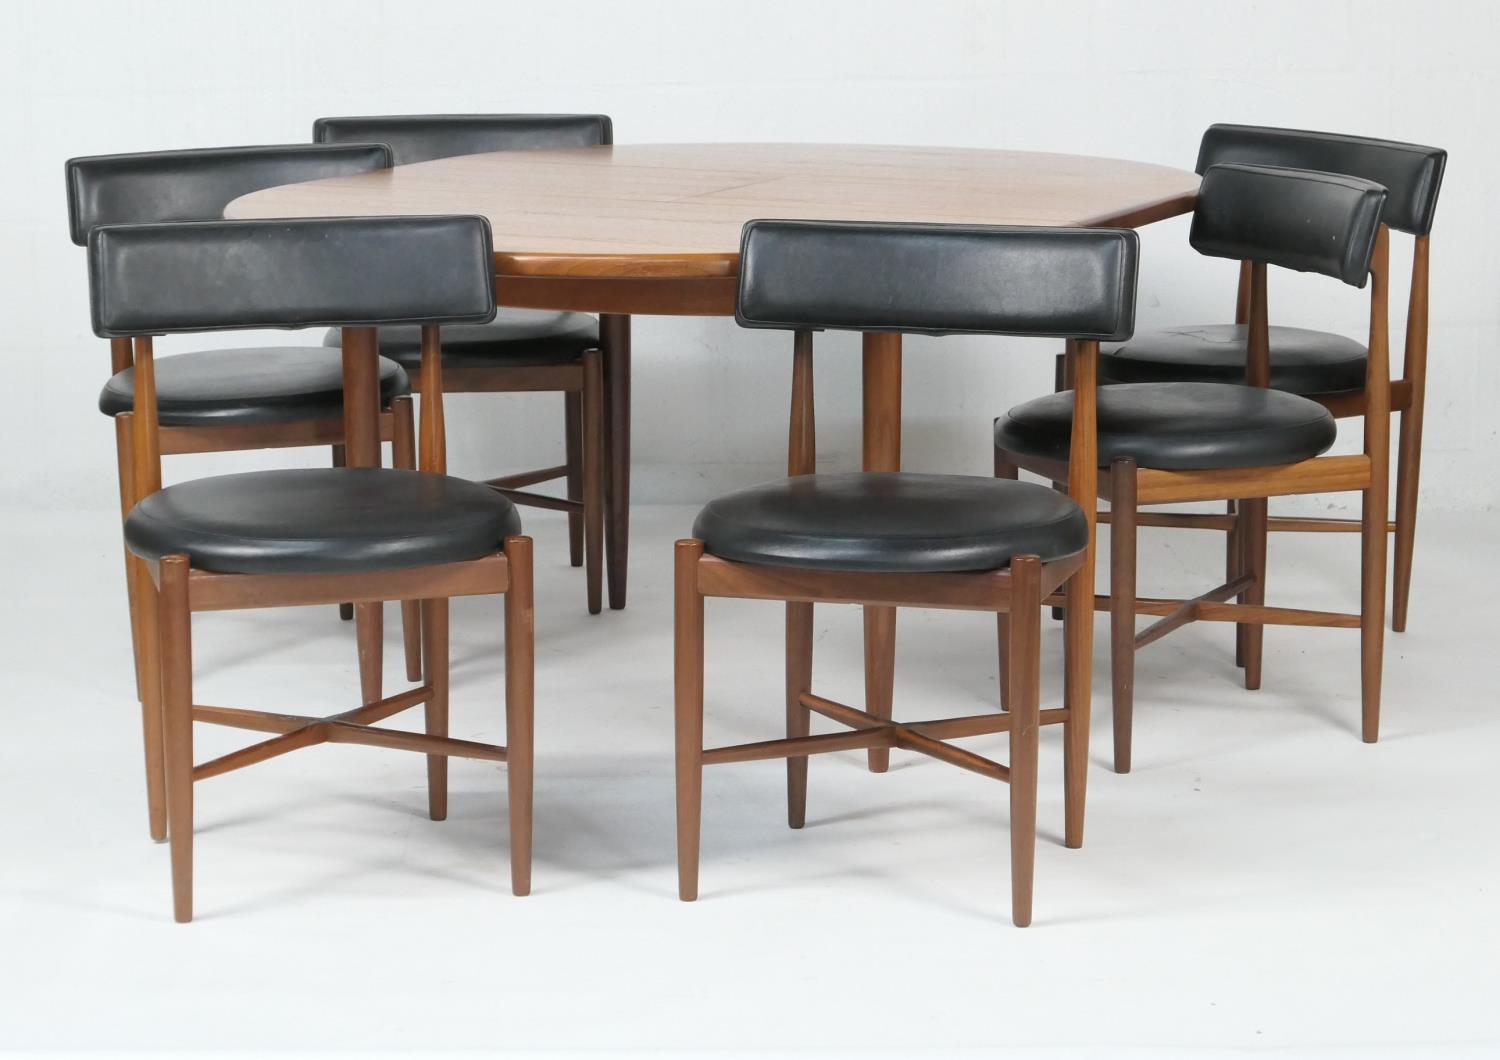 G-Plan teak Fresco extending dining table and chairs, the circular table 122cm diameter, extending